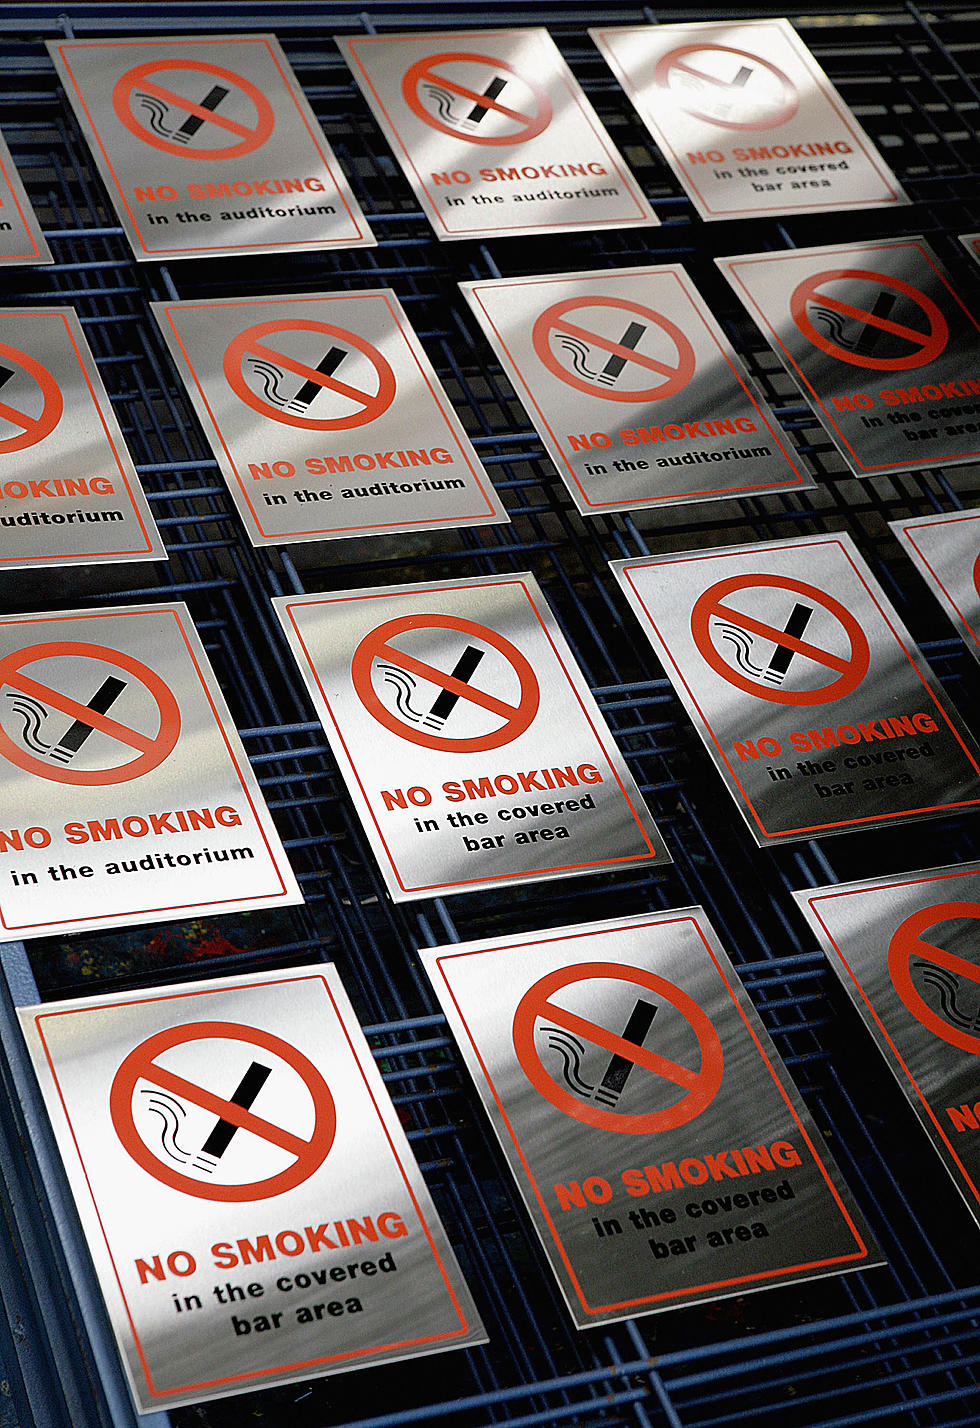 Casper Indoor Public Smoking Ban, Set To Start Sept 1st